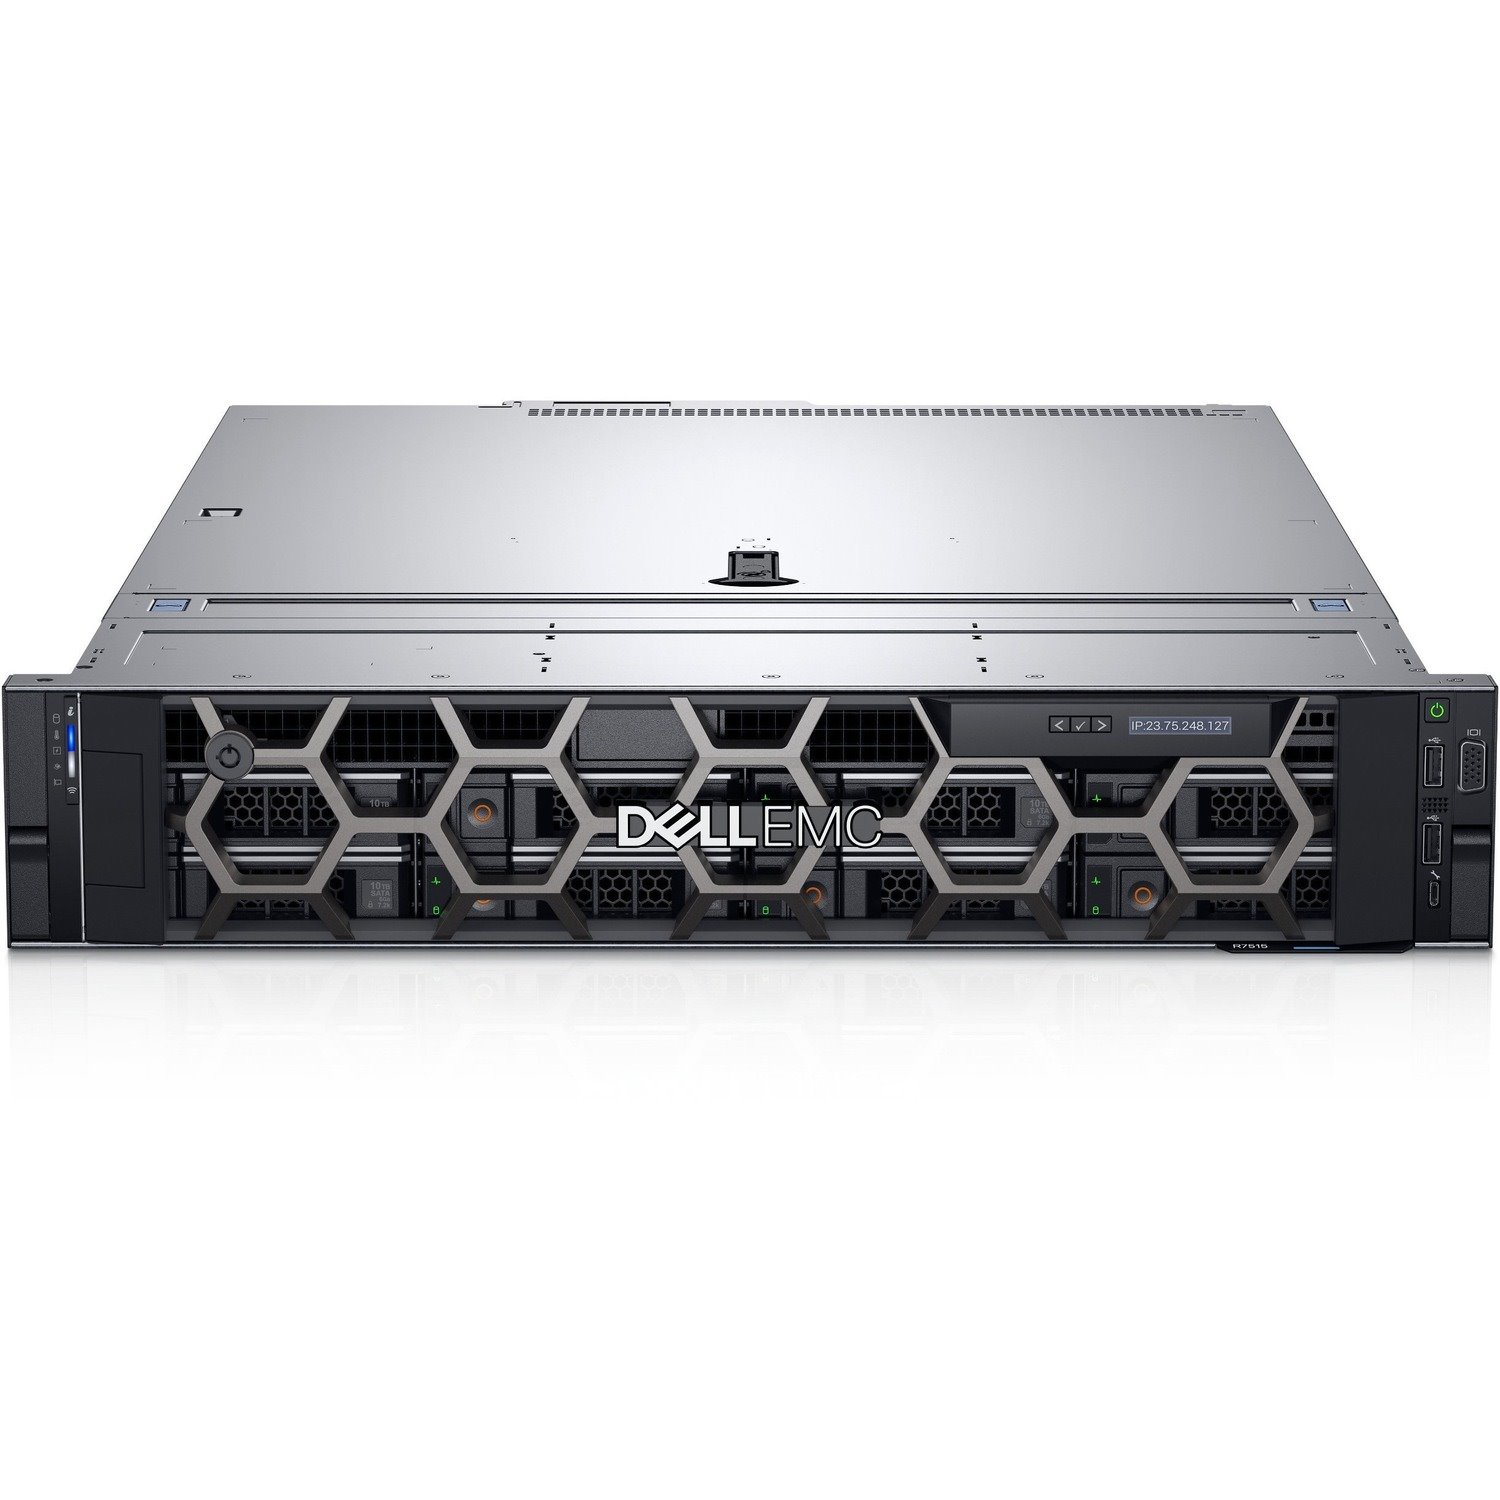 Dell EMC PowerEdge R7515 2U Rack Server - 1 x AMD EPYC 7302P 3 GHz - 16 GB RAM - 480 GB SSD - (1 x 480GB) SSD Configuration - 12Gb/s SAS, Serial ATA/600 Controller